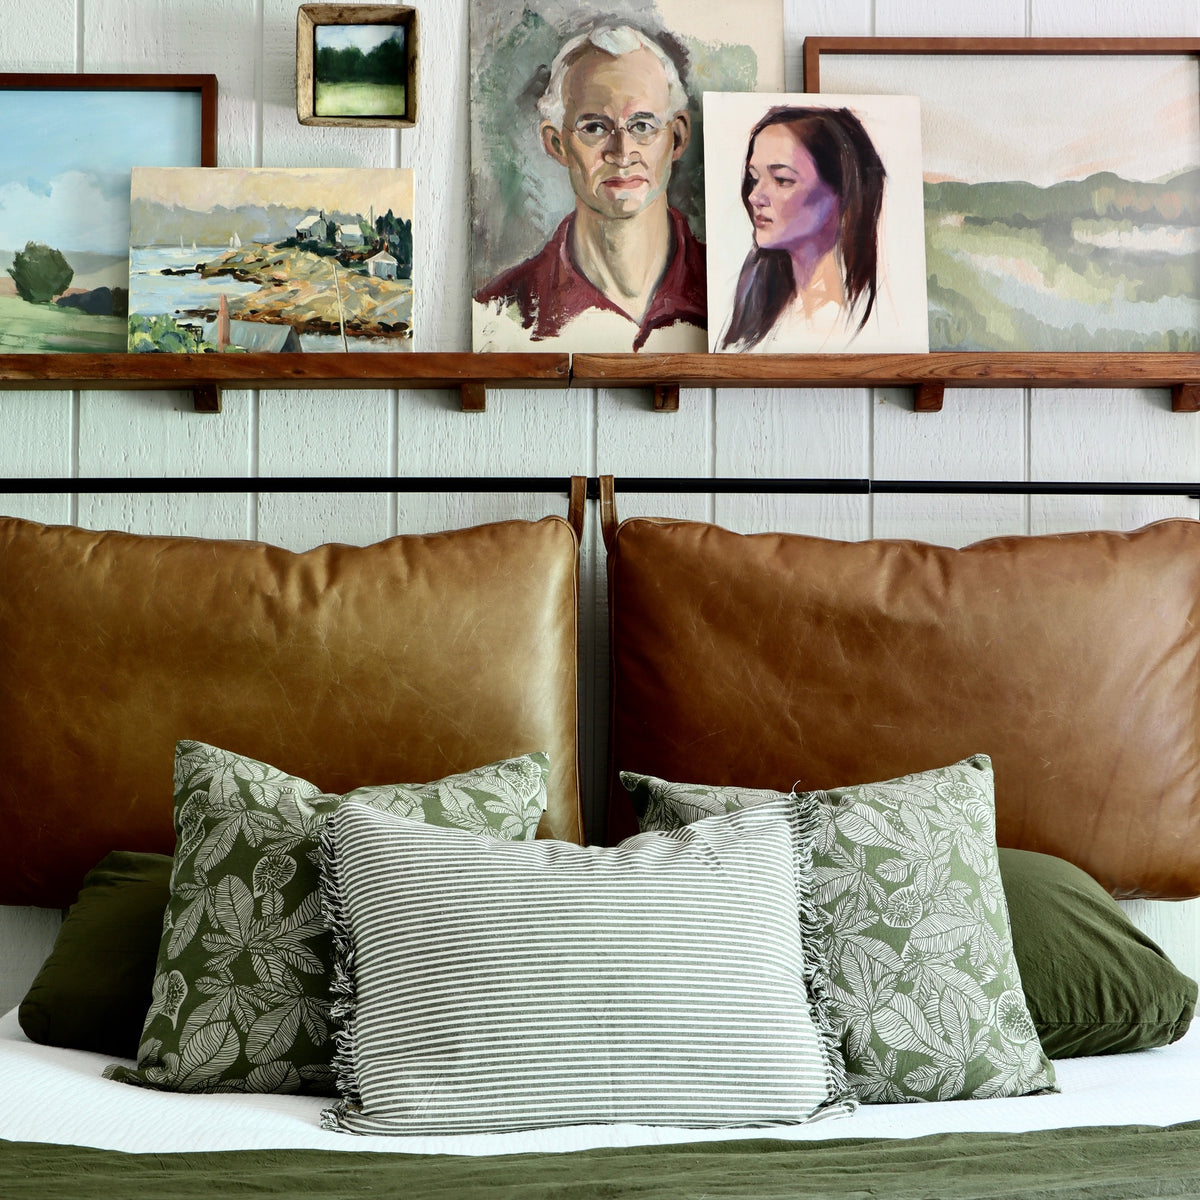 Abby Stripe Charcoal Pillow Cover - Holistic Habitat 